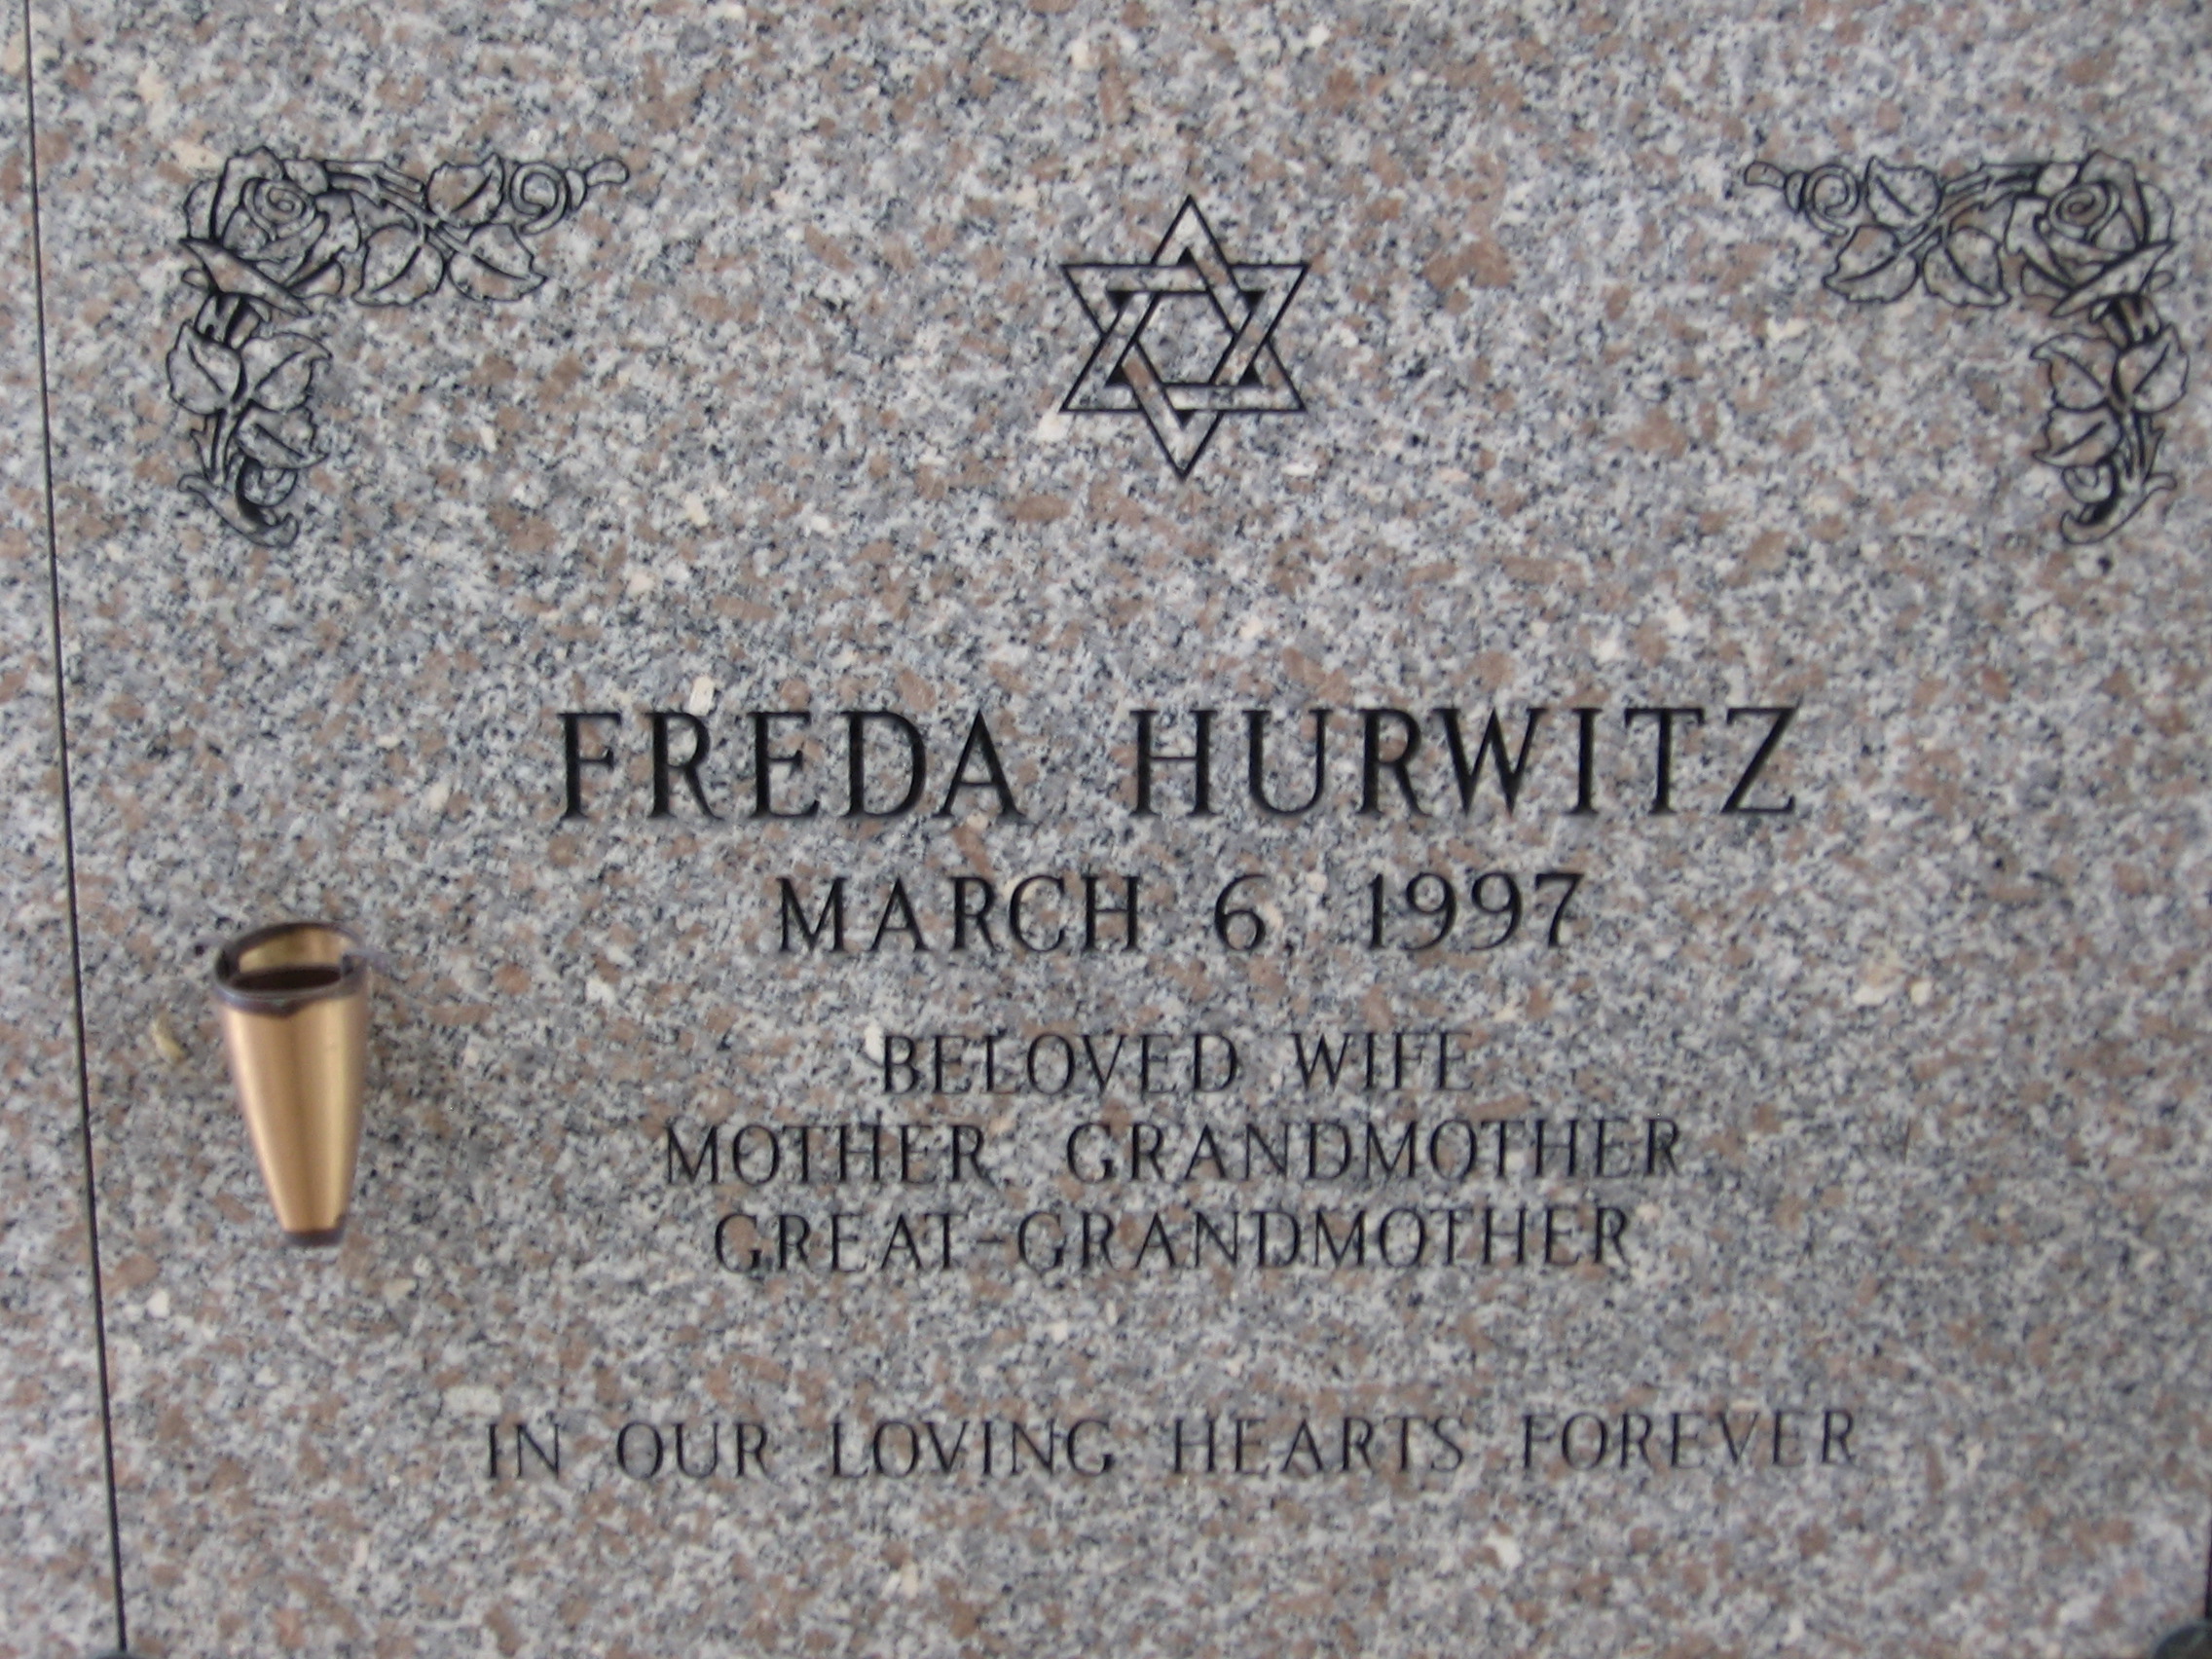 Freda Hurwitz